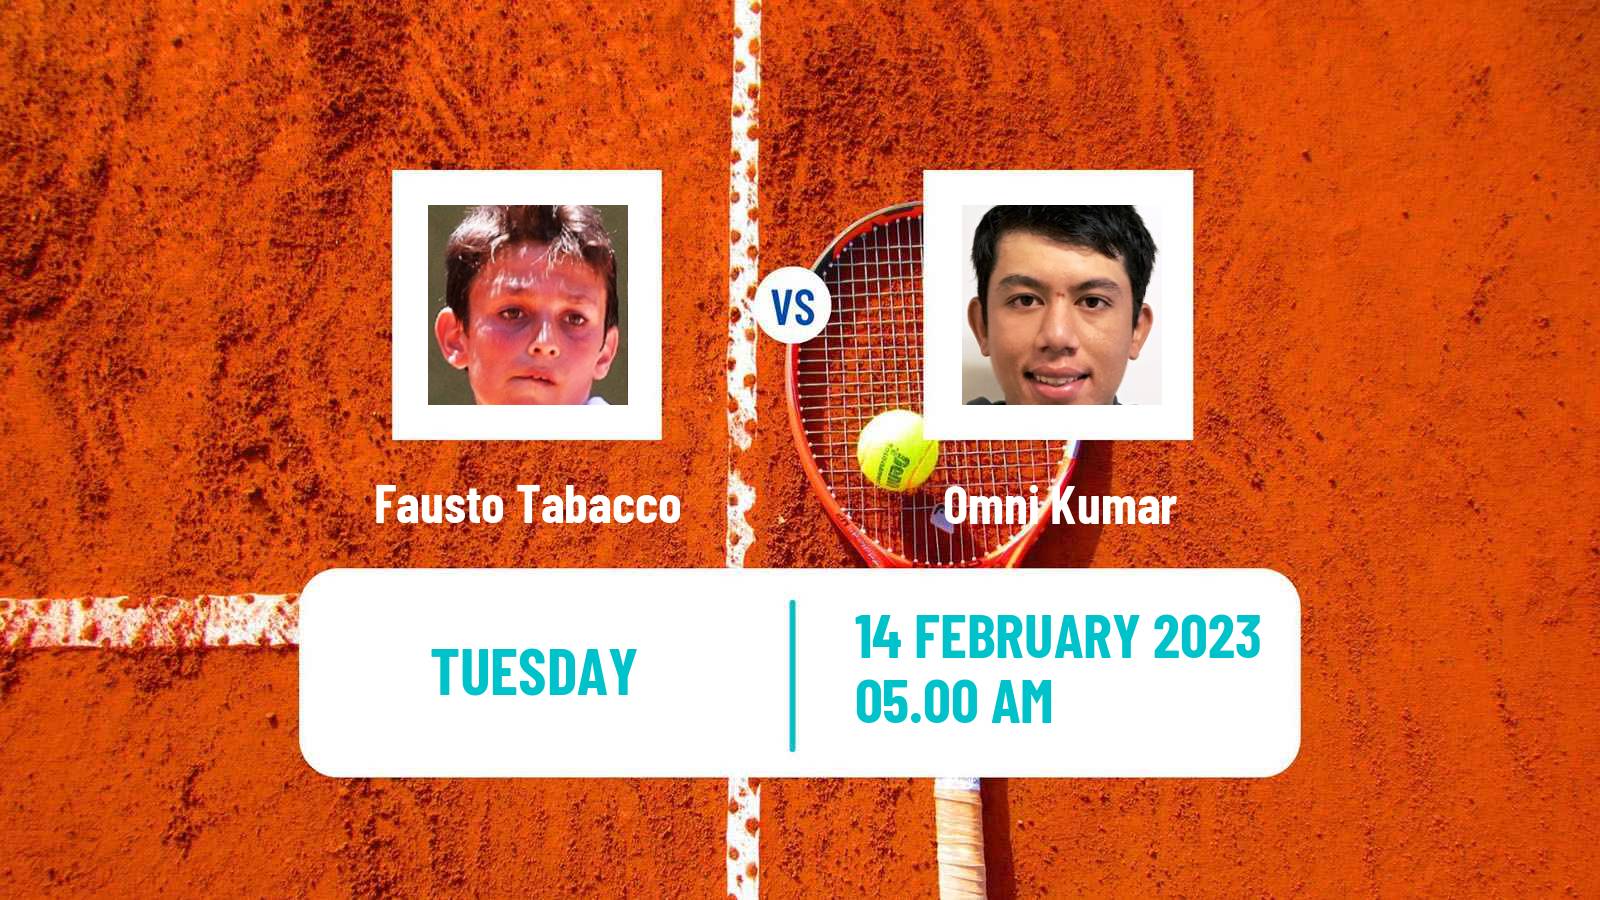 Tennis ITF Tournaments Fausto Tabacco - Omni Kumar